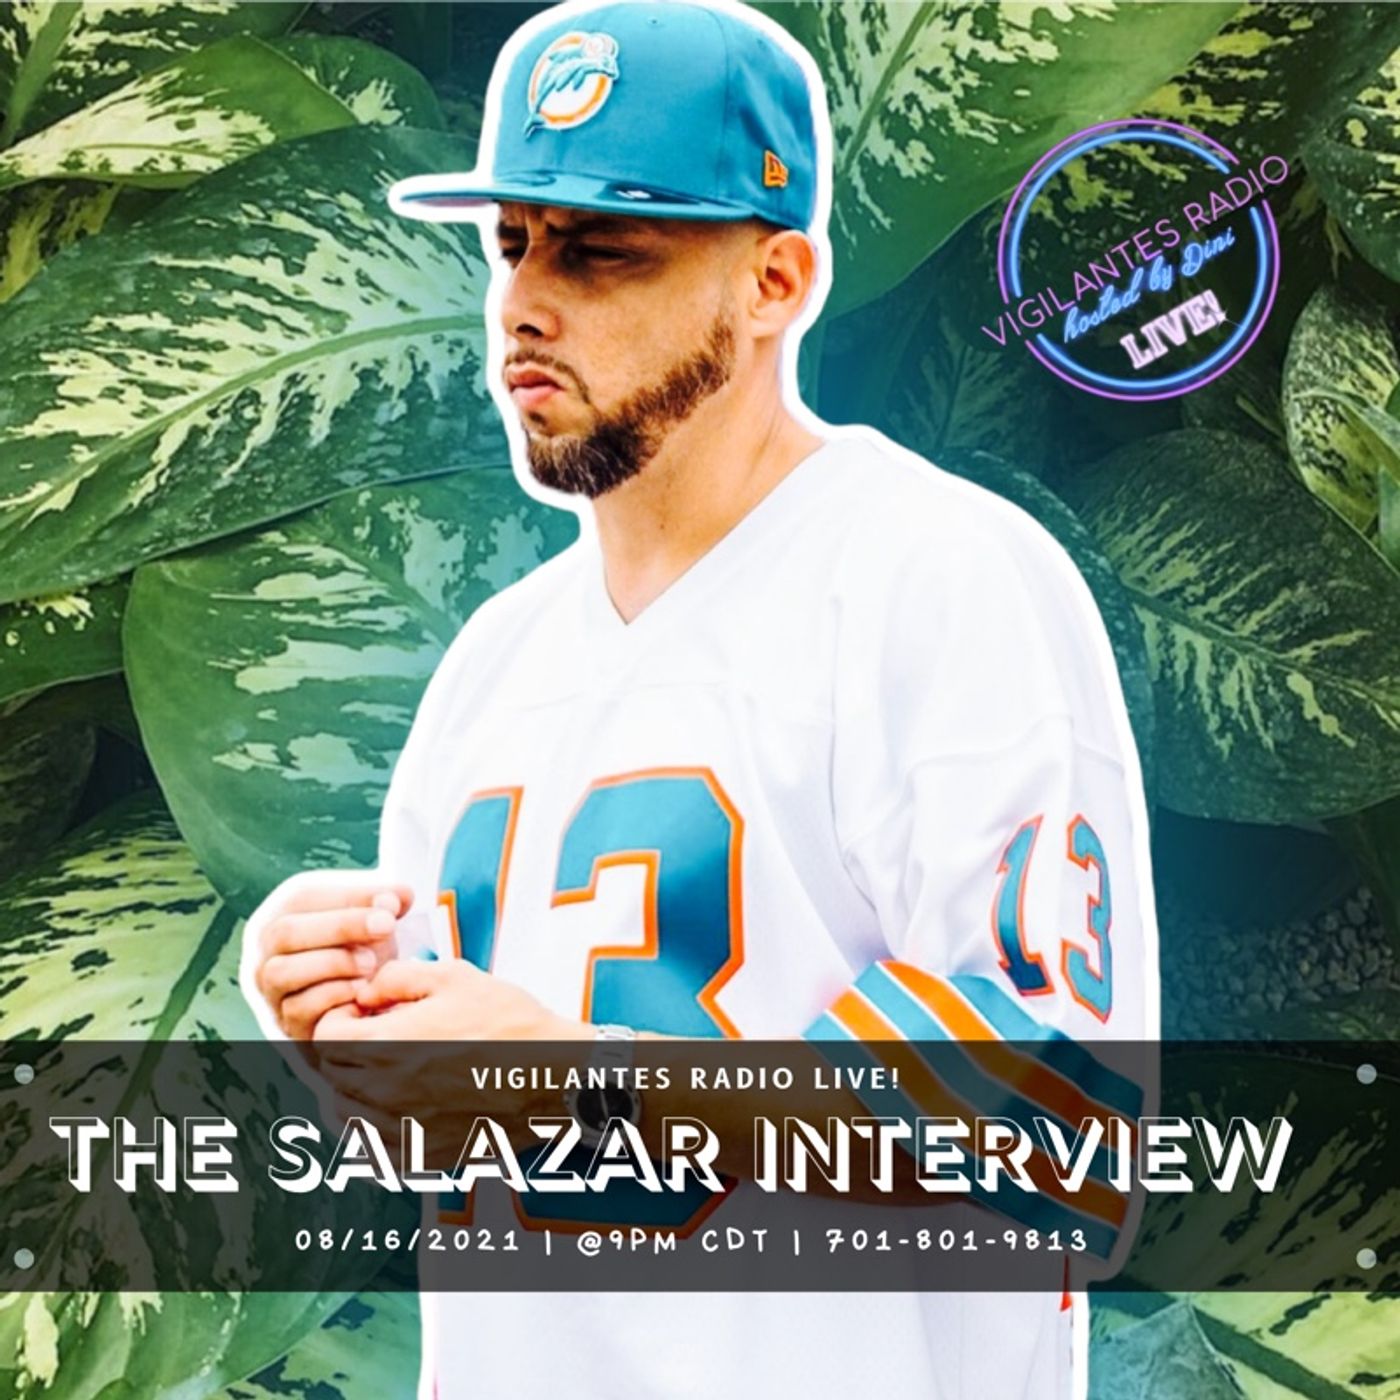 The Salazar Interview. Image